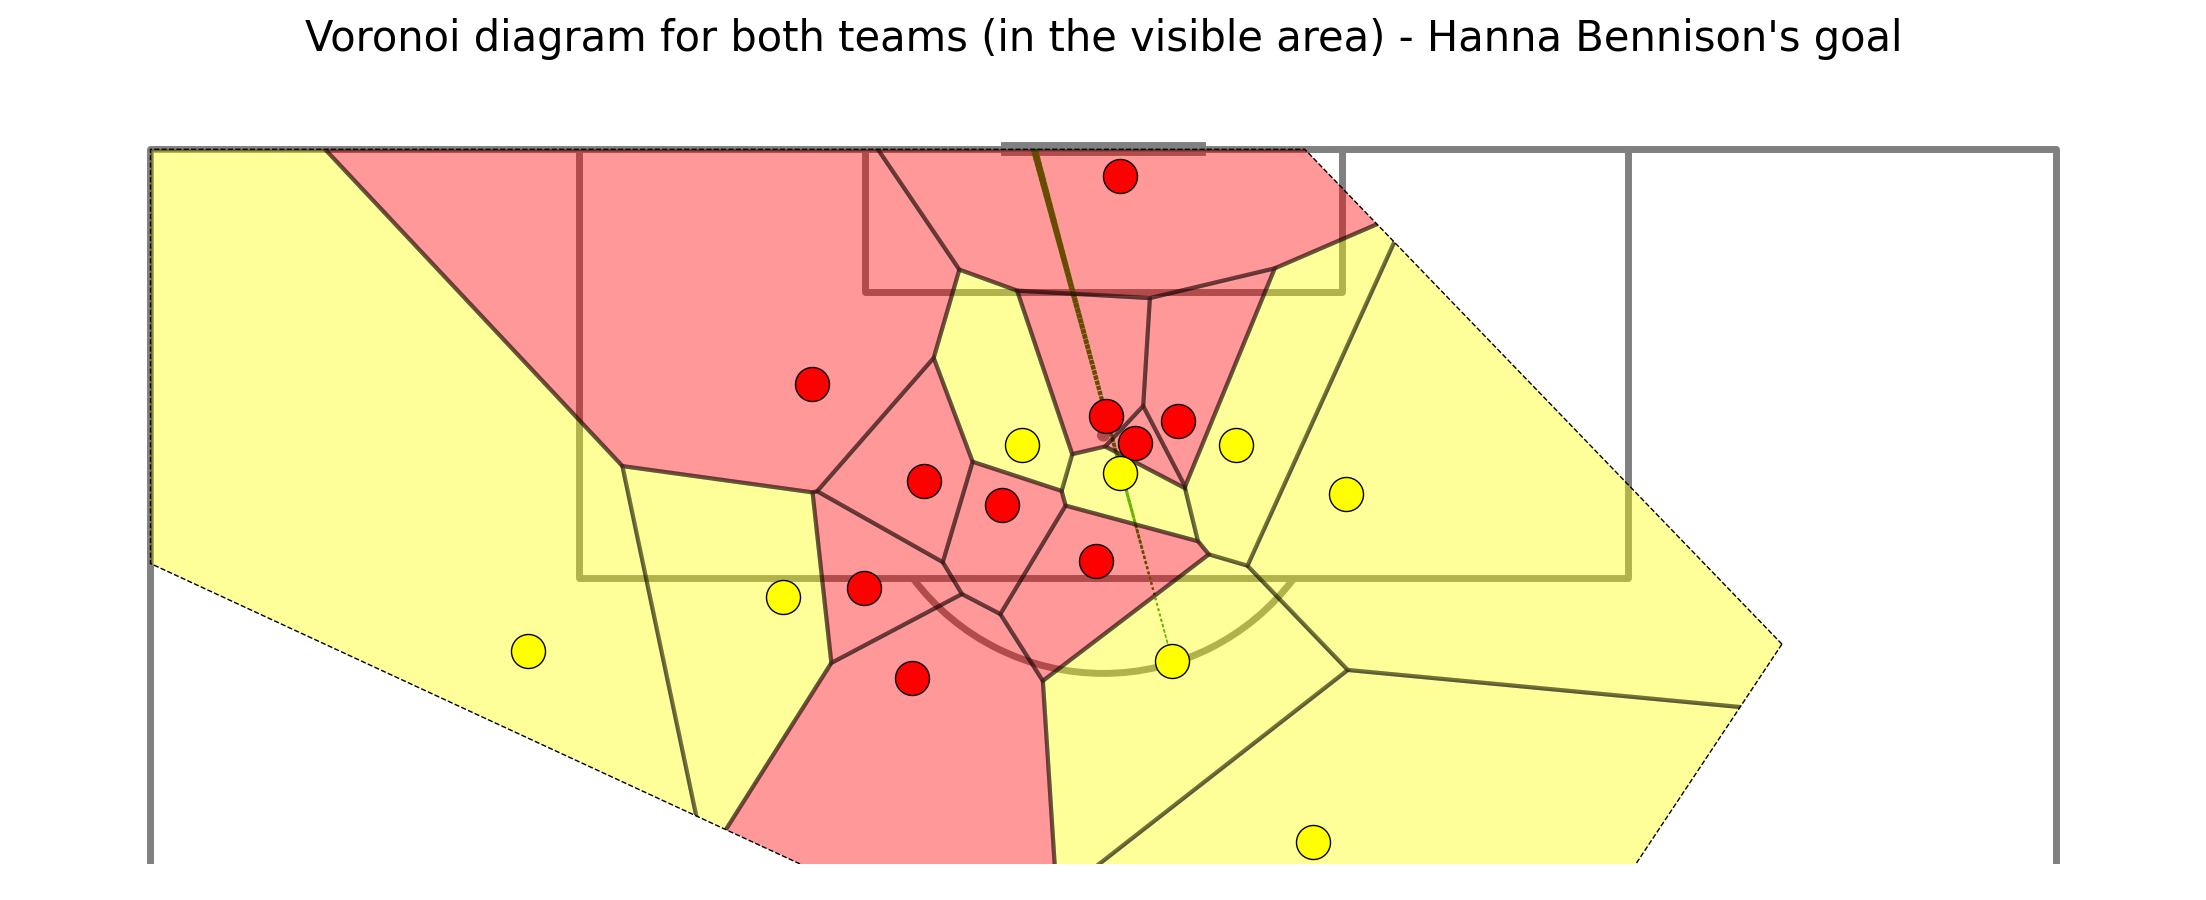 Voronoi diagram for both teams (in the visible area) - Hanna Bennison's goal